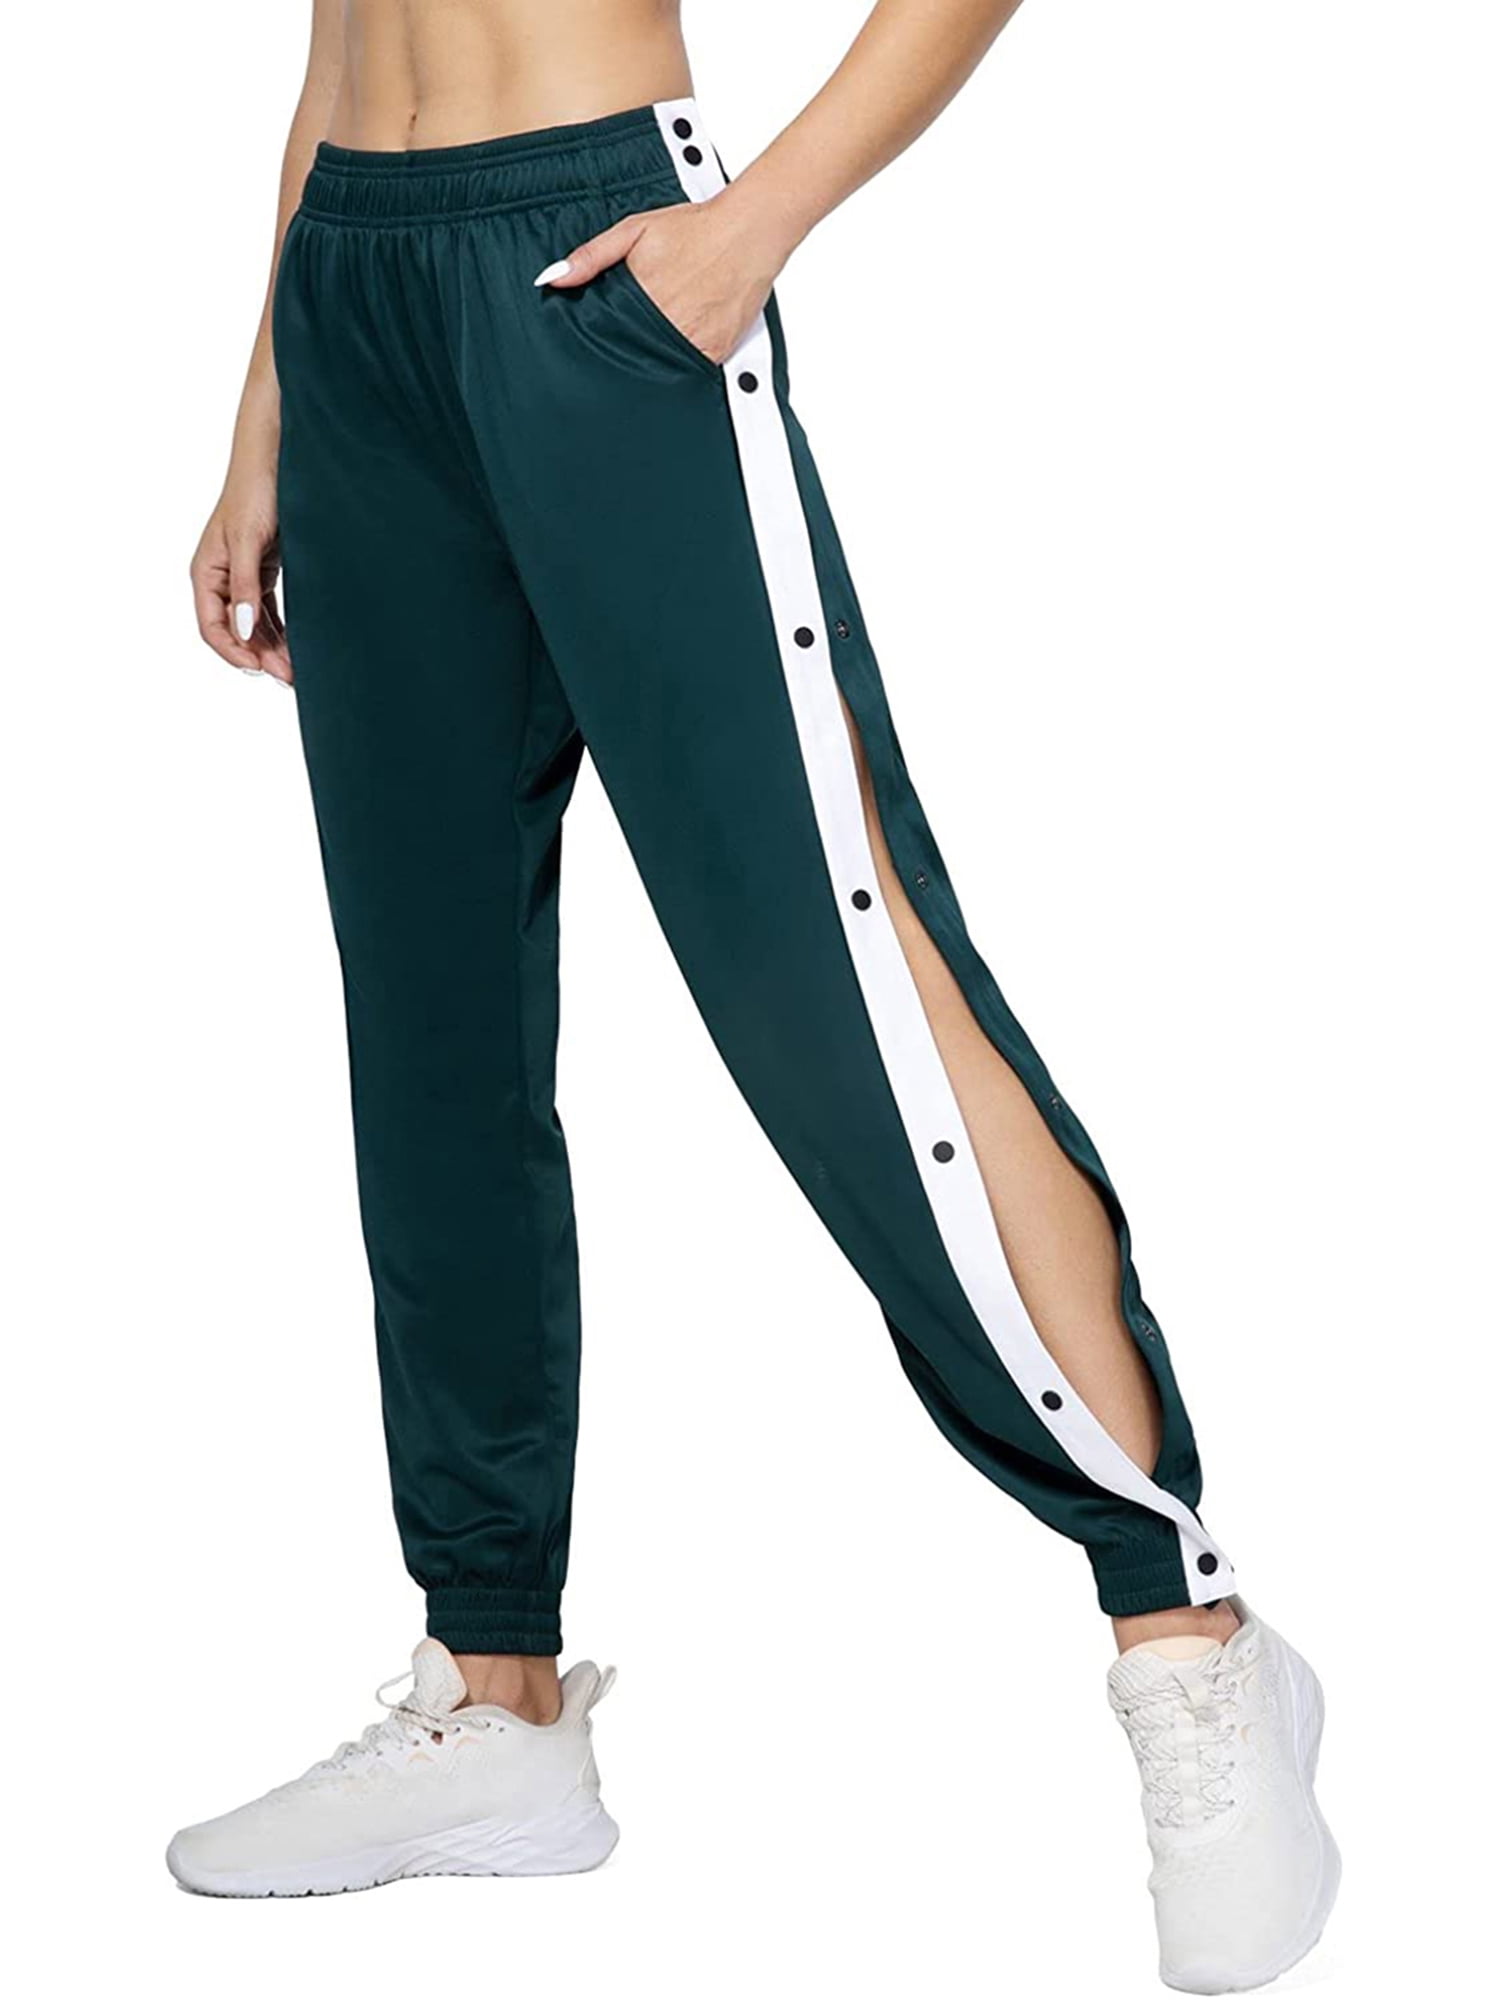 selecteer Communicatie netwerk Opsplitsen Women High Split Side Joggers Snap Button Track Pants High Waist Sport  Active Long Pant with Pocket - Walmart.com